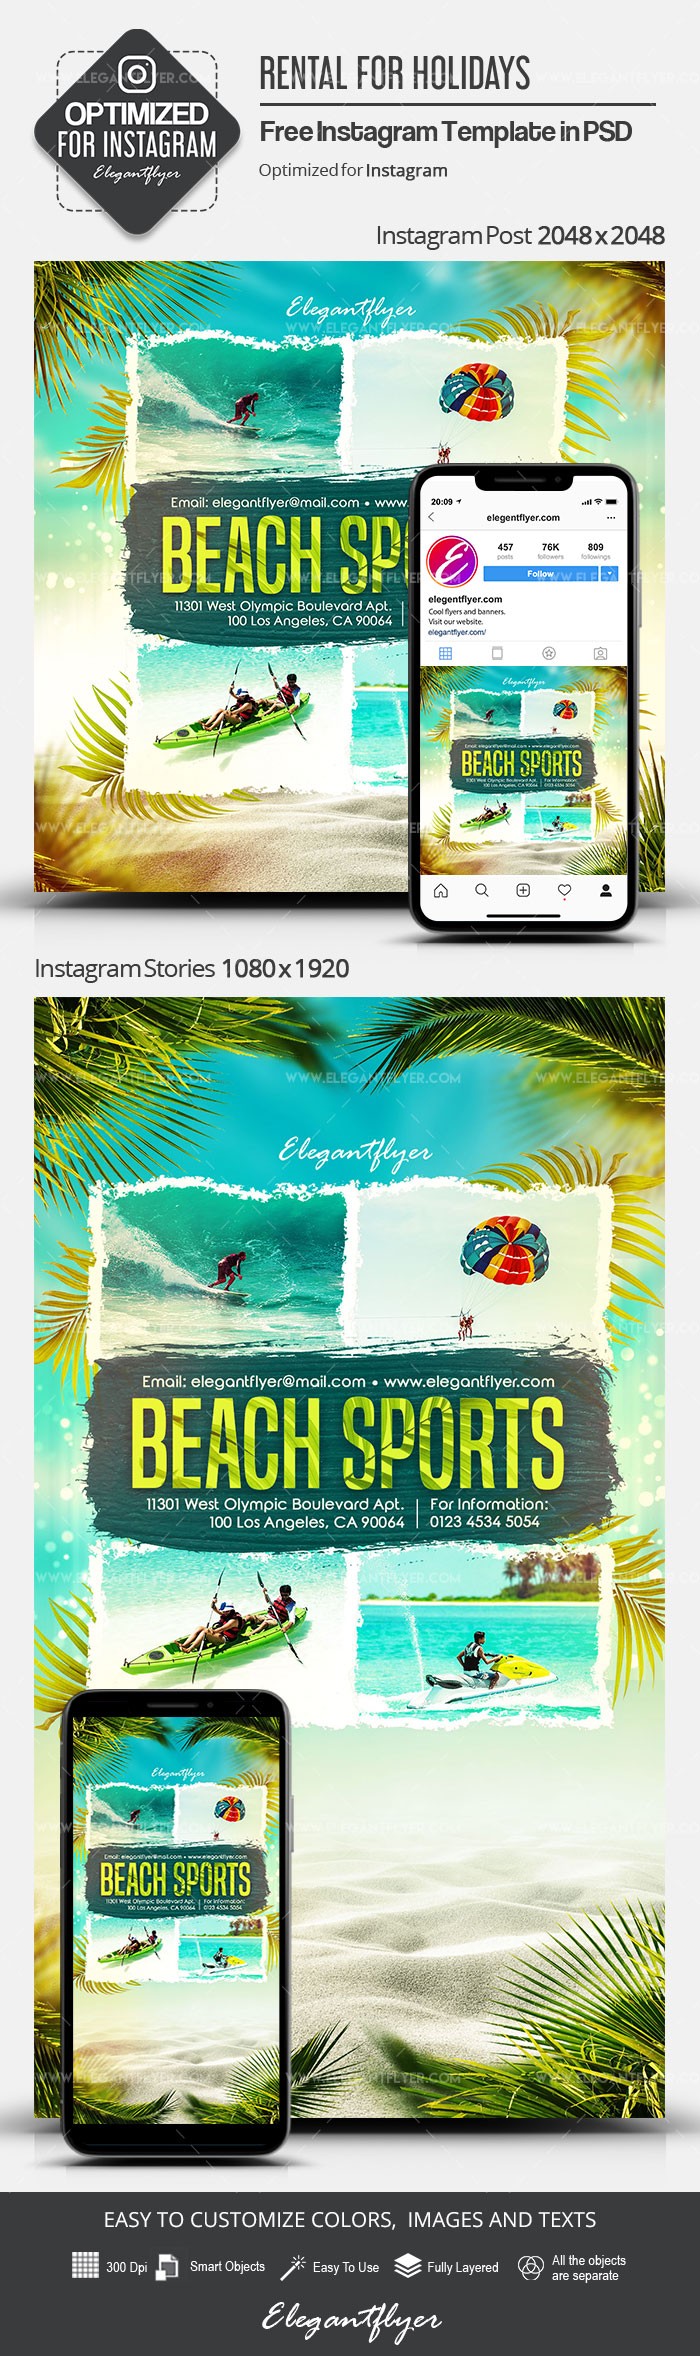 Beach Sports Instagram by ElegantFlyer